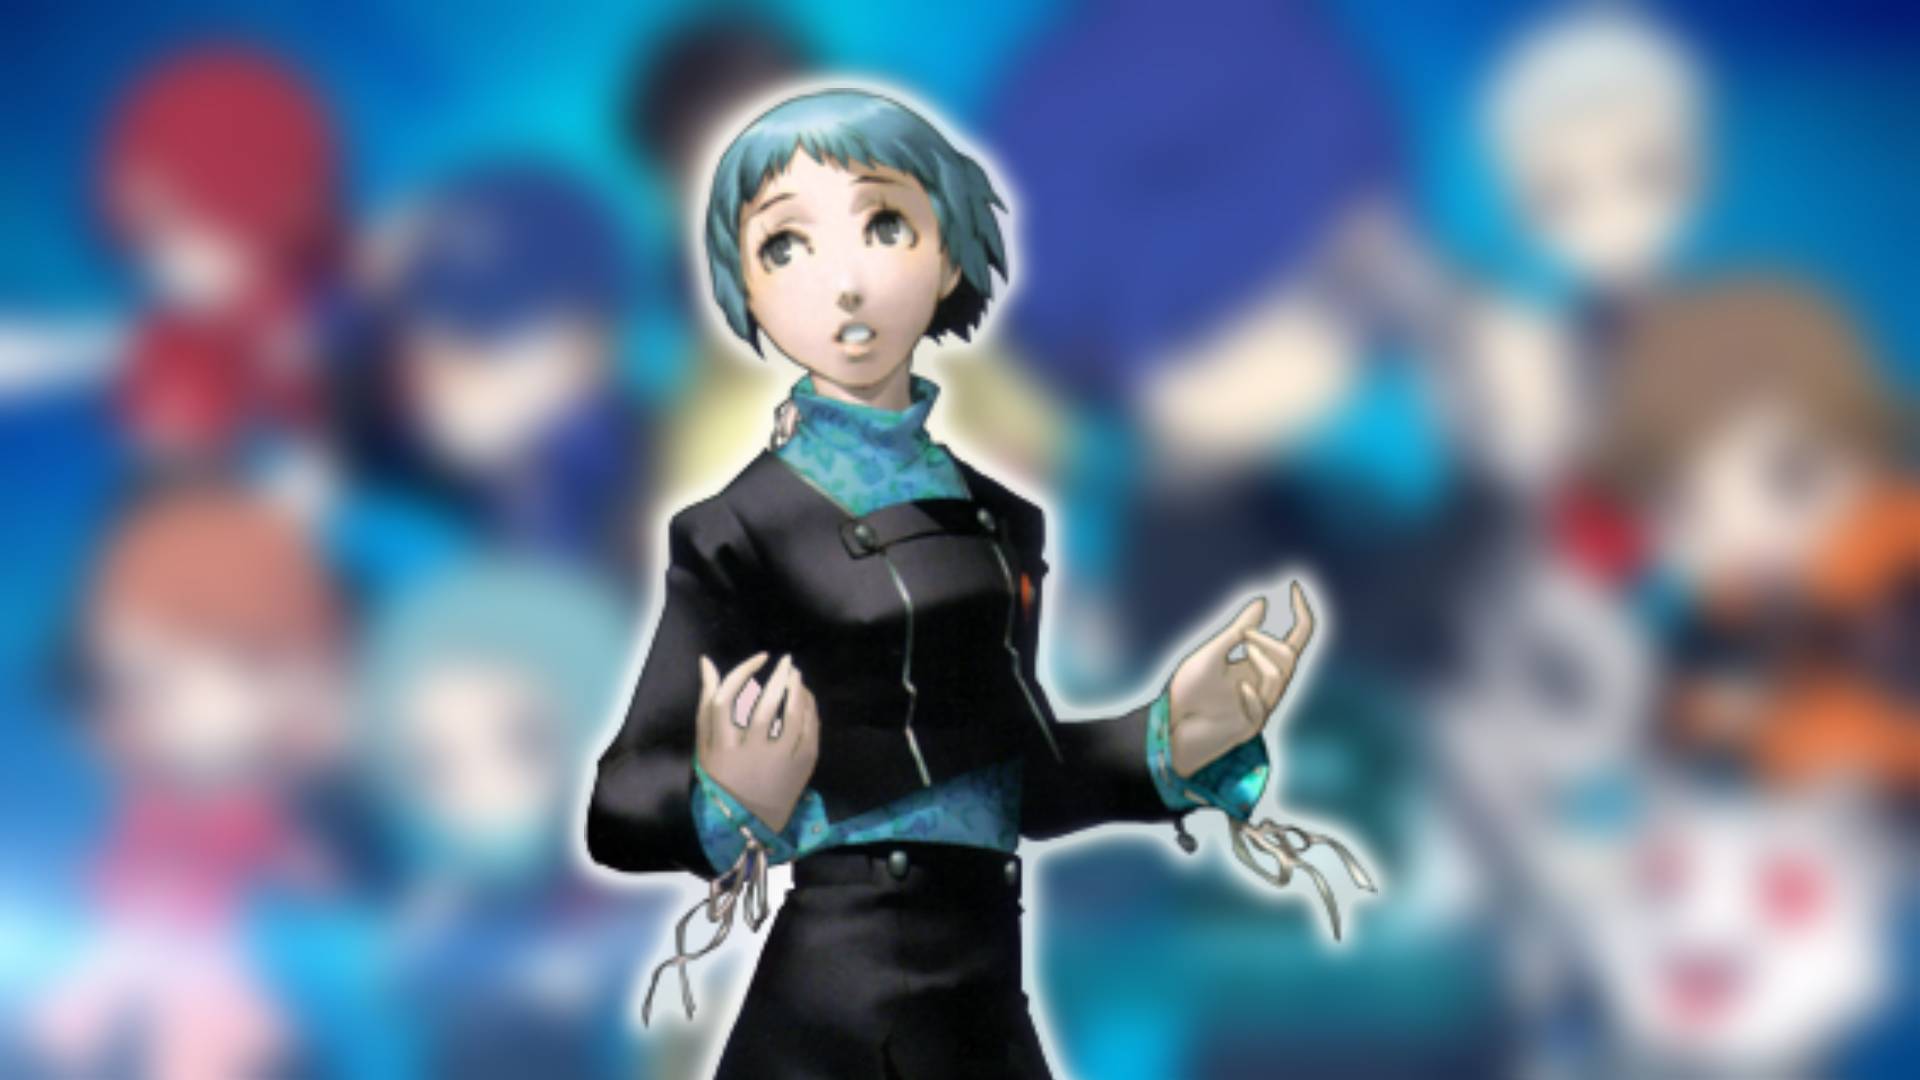 Persona 3 characters: Fuuka Yamagishi from Persona 3 Portable are visible